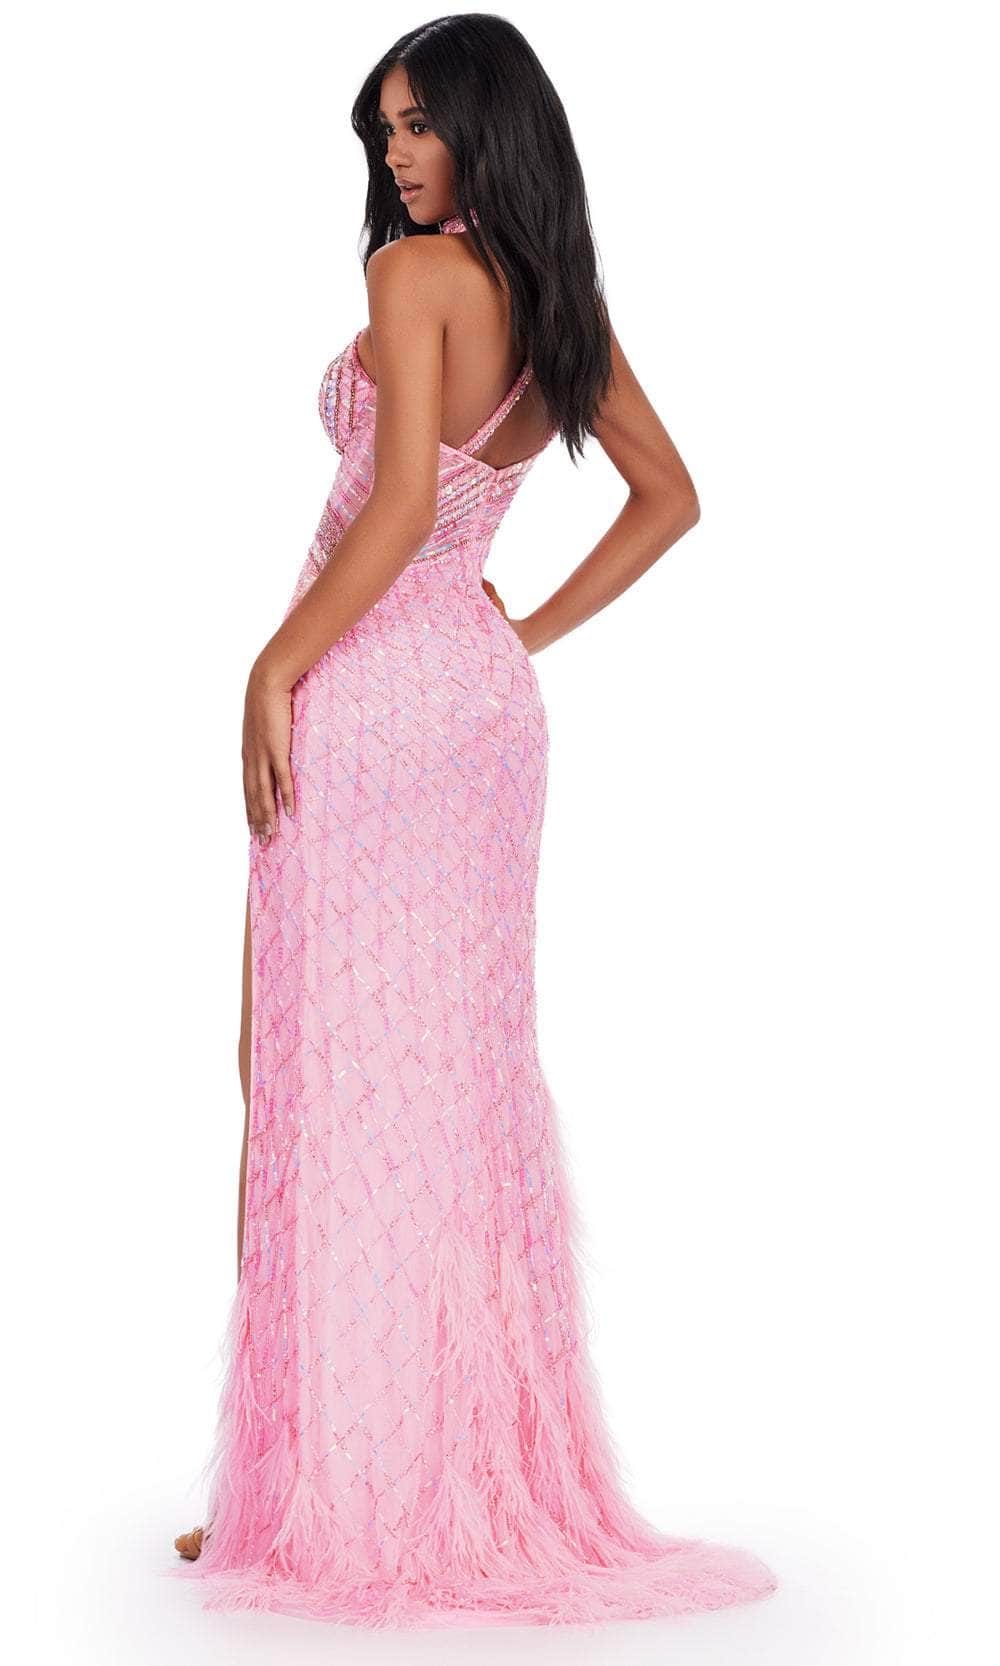 Ashley Lauren 11492 - Asymmetrical Bustier Prom Dress Prom Dresses